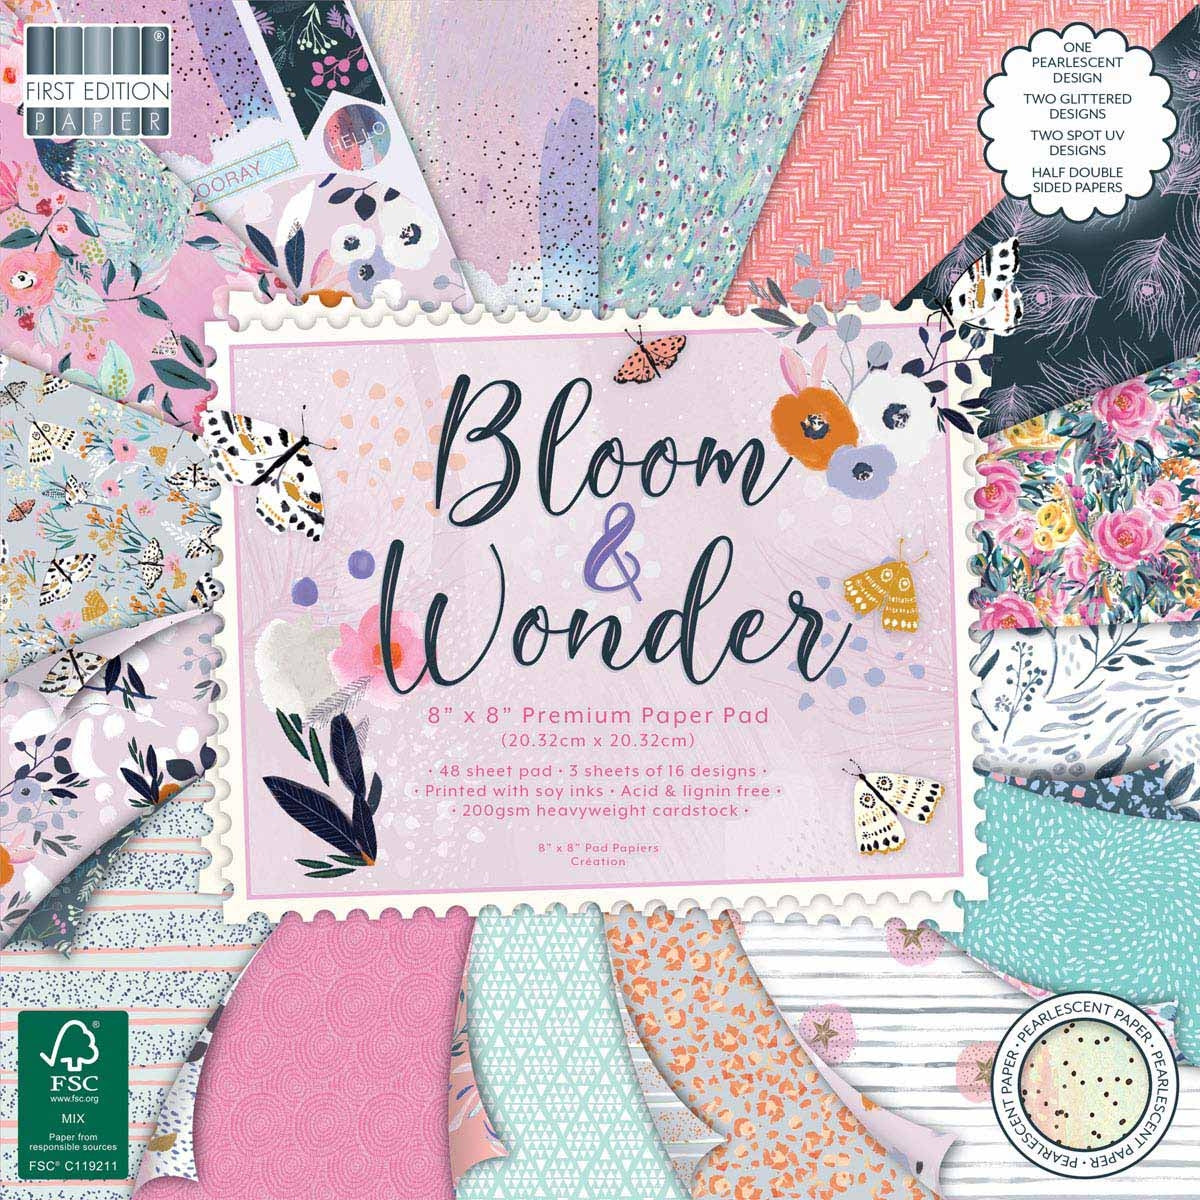 First Edition - 8x8 Pad - Bloom & Wonder